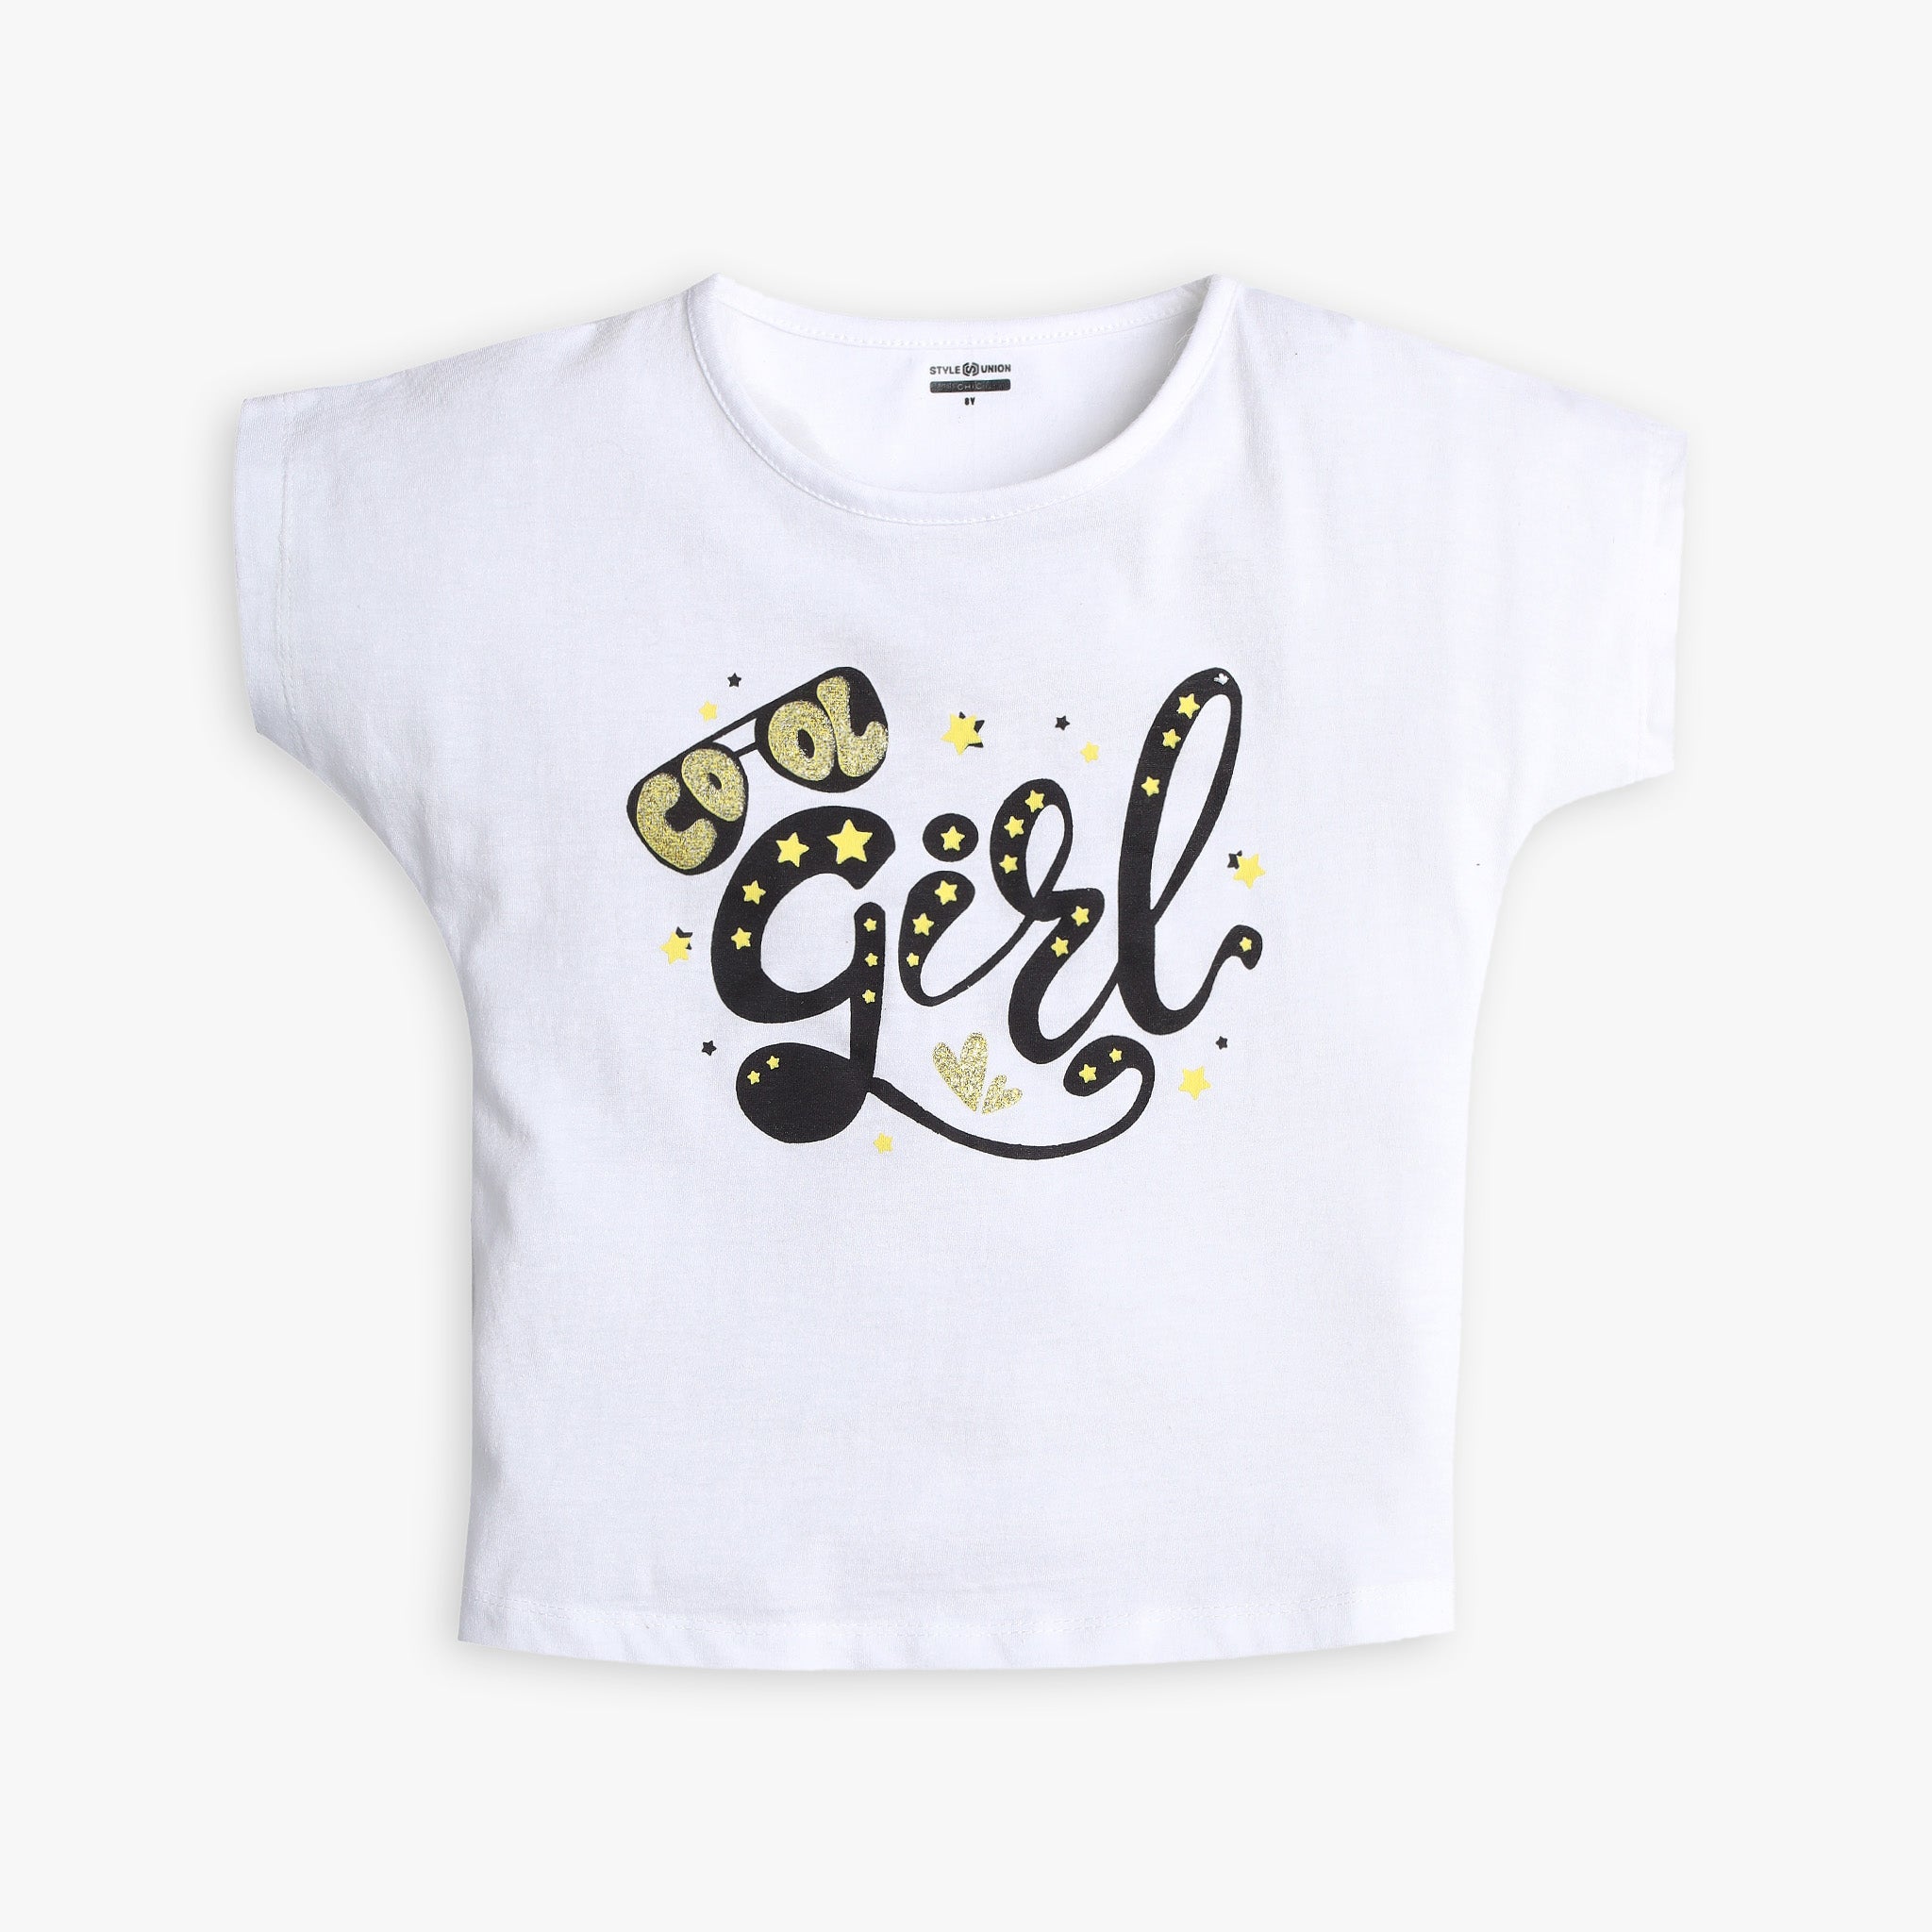 Girl Wearing Girl's Regular Fit Graphic T-Shirt